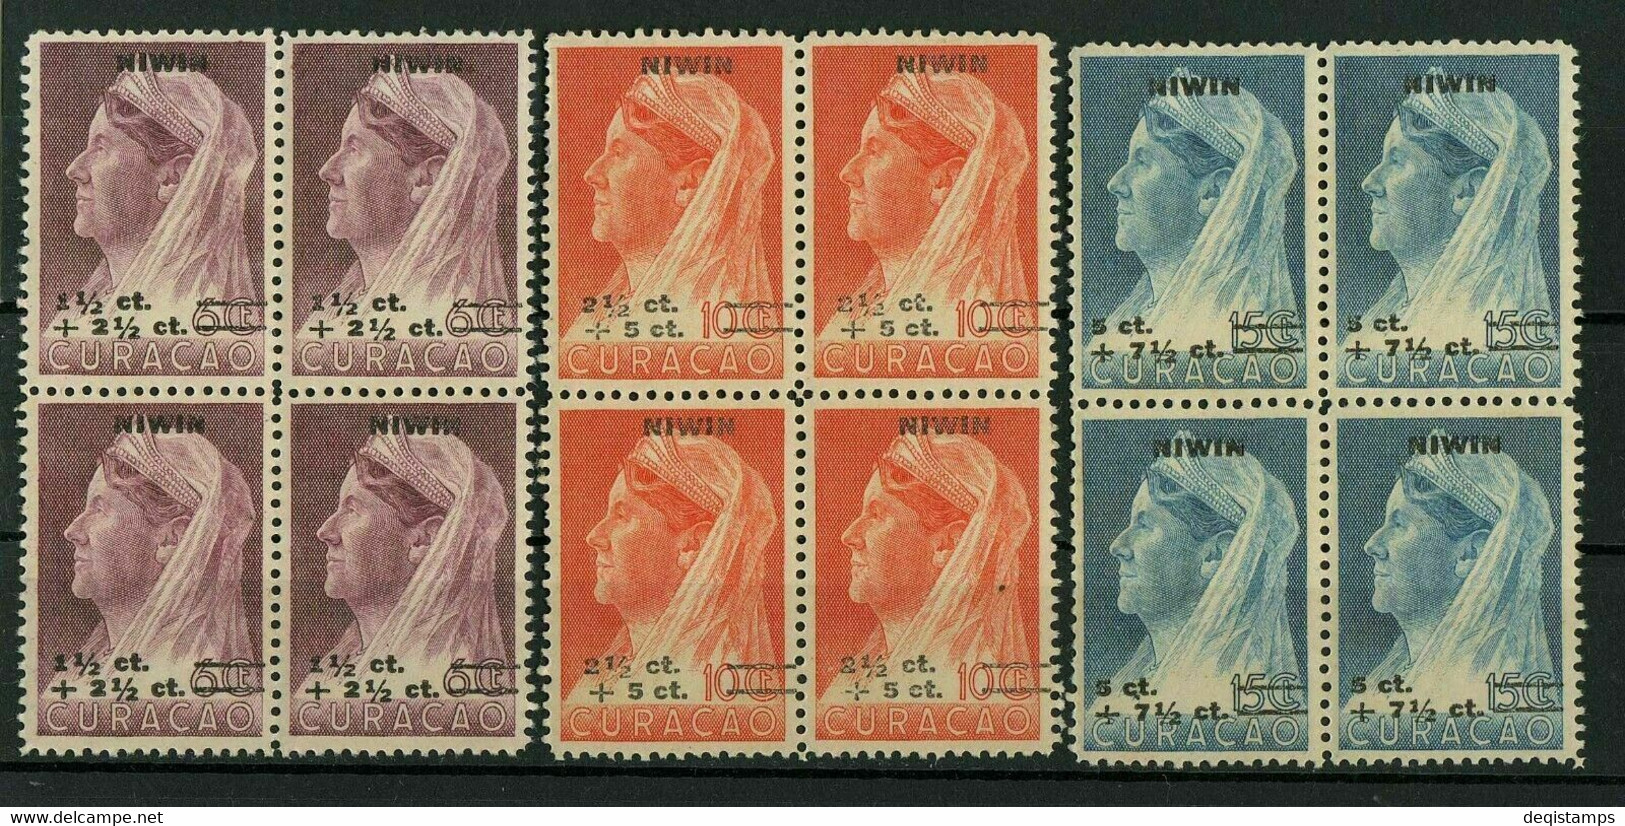 Curacao Set 1947 ☀ Overprint NIWIN, Block Of Four ☀ Mint Never Hinged(**) - Curaçao, Nederlandse Antillen, Aruba